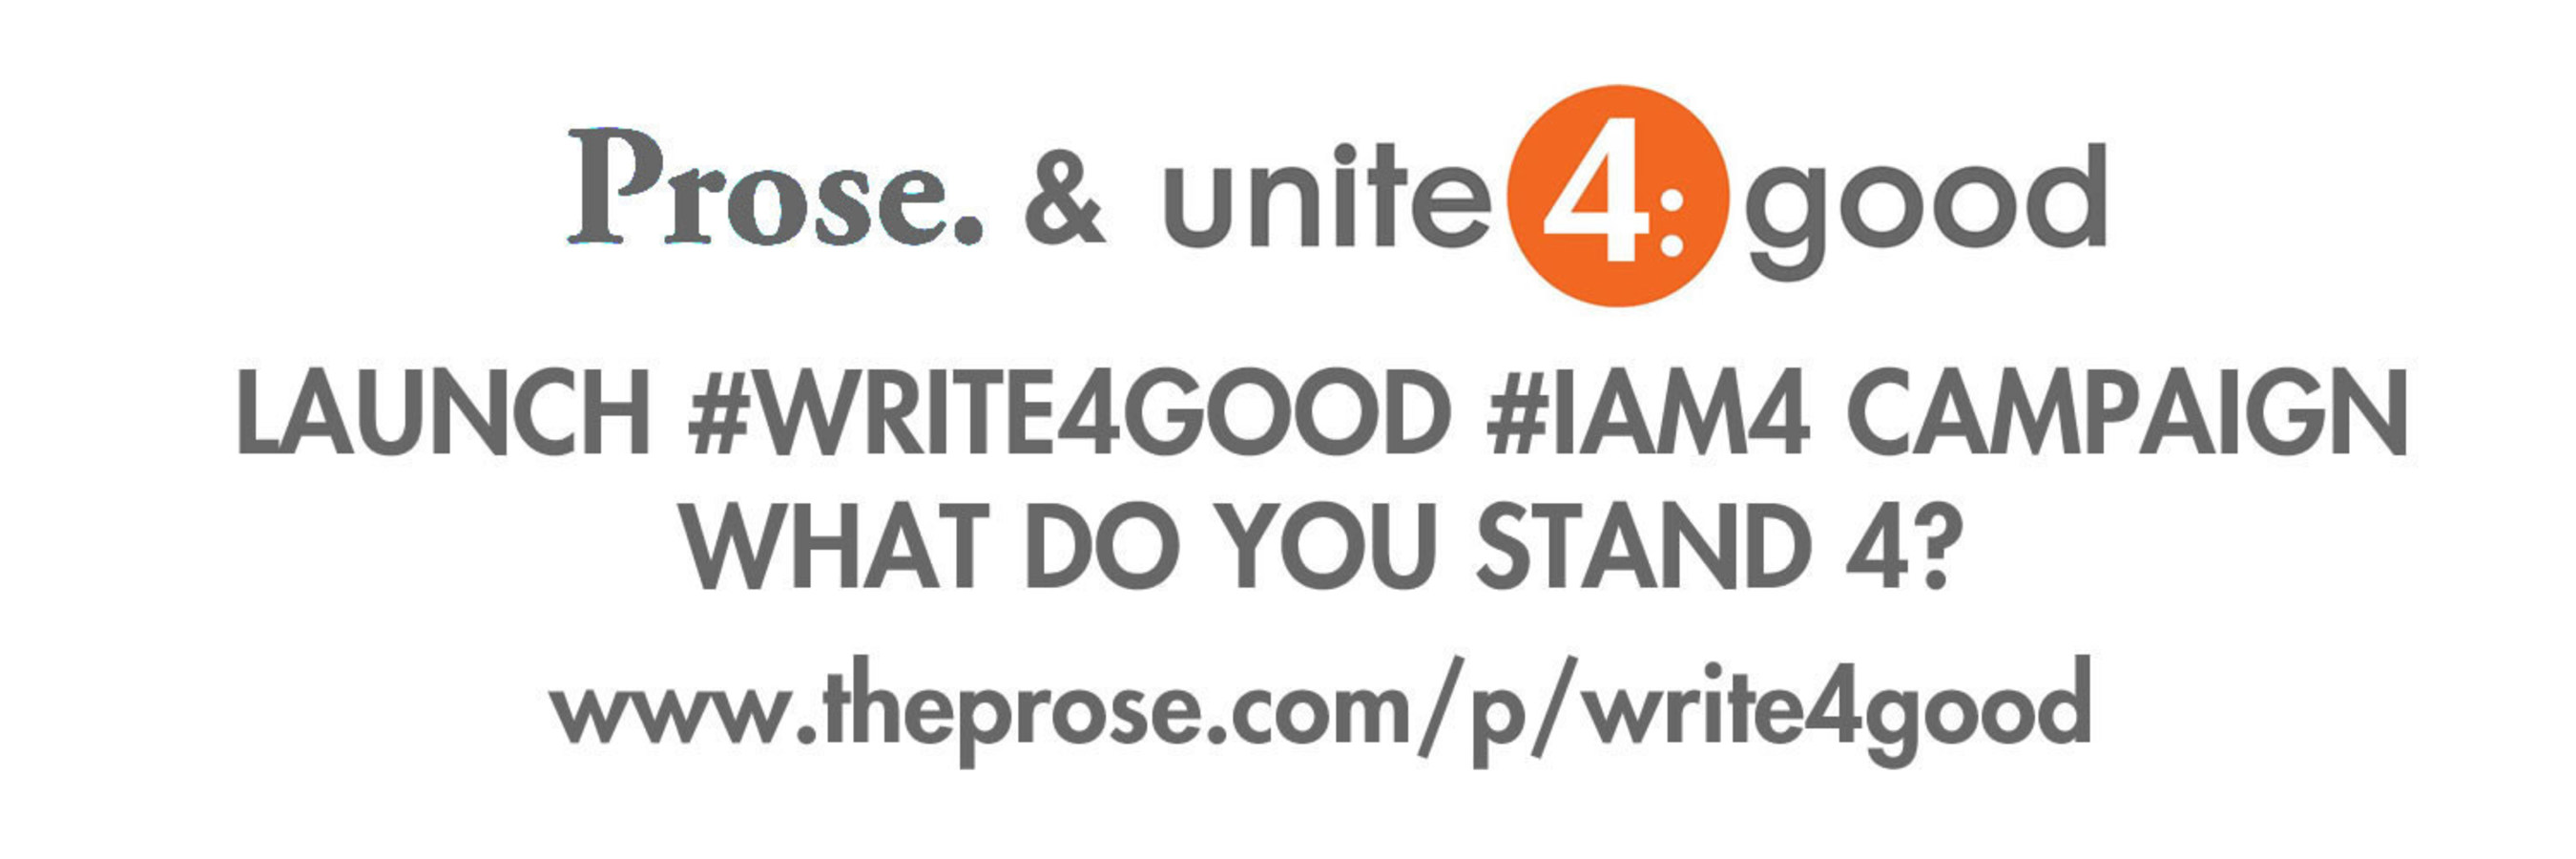 Prose & unite4:good #write4good